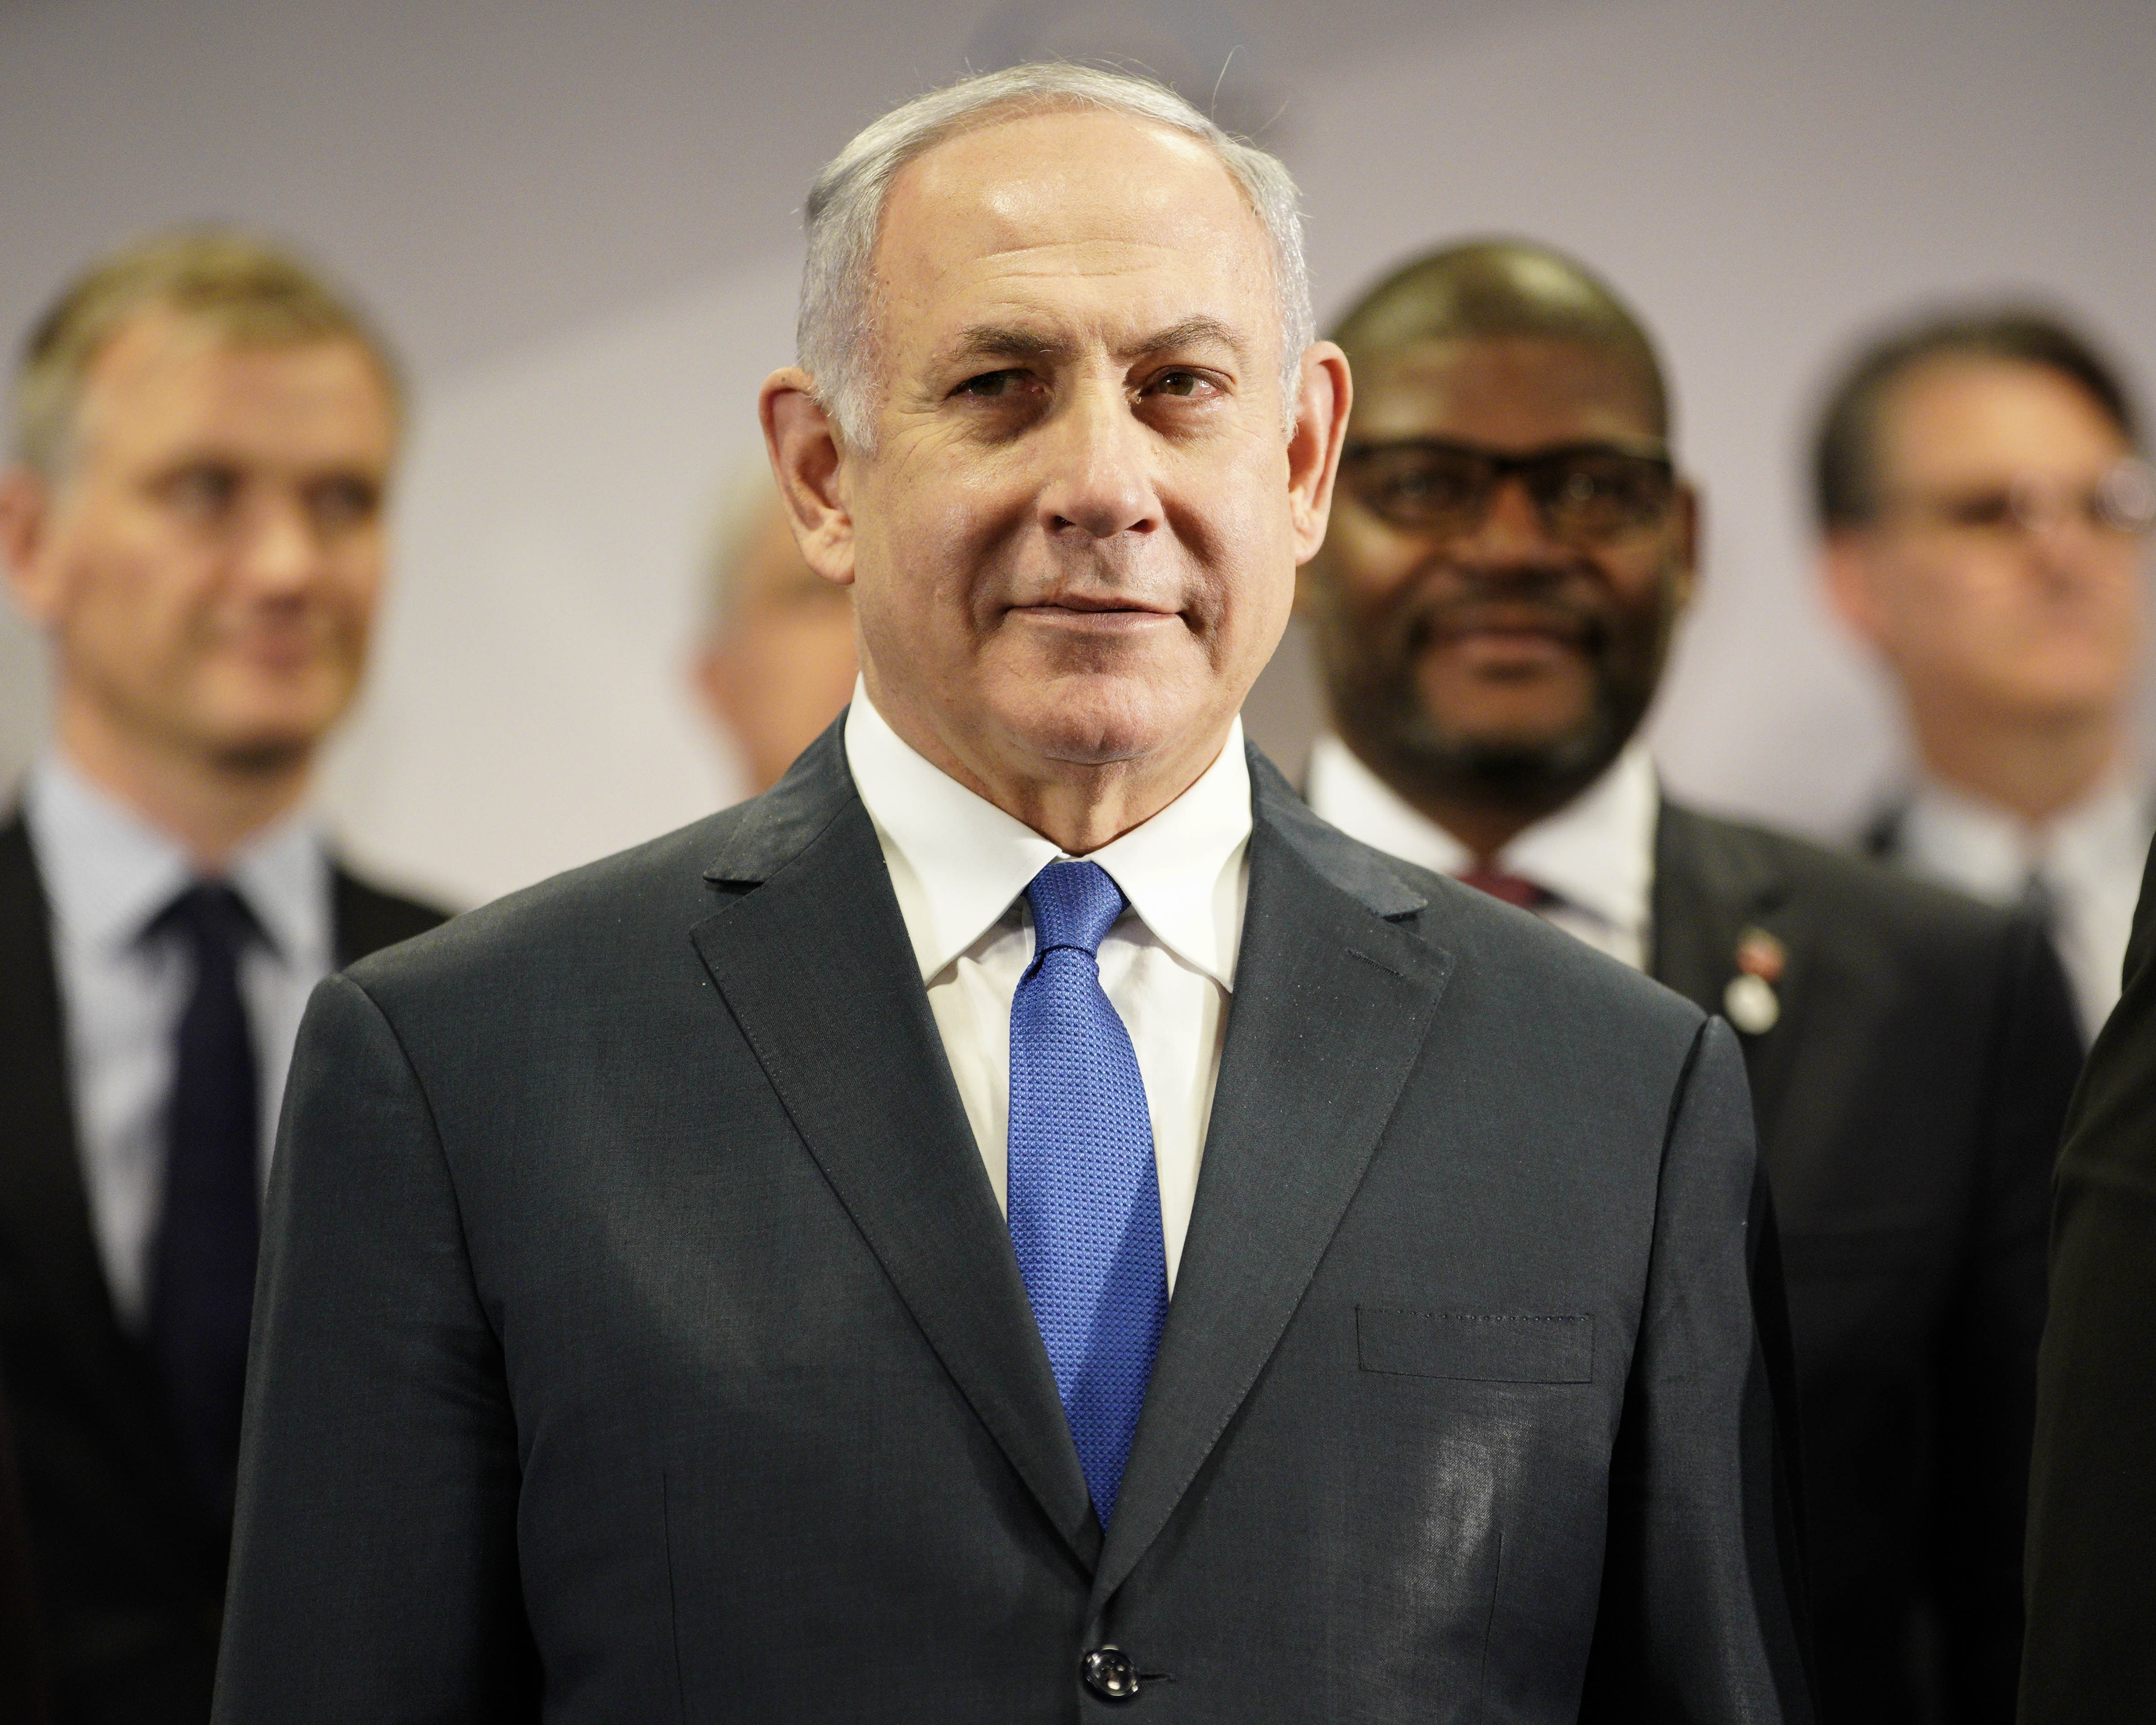 UPDATE 1-Netanyahu repeats pledge to annex Israeli settlements in occupied West Bank